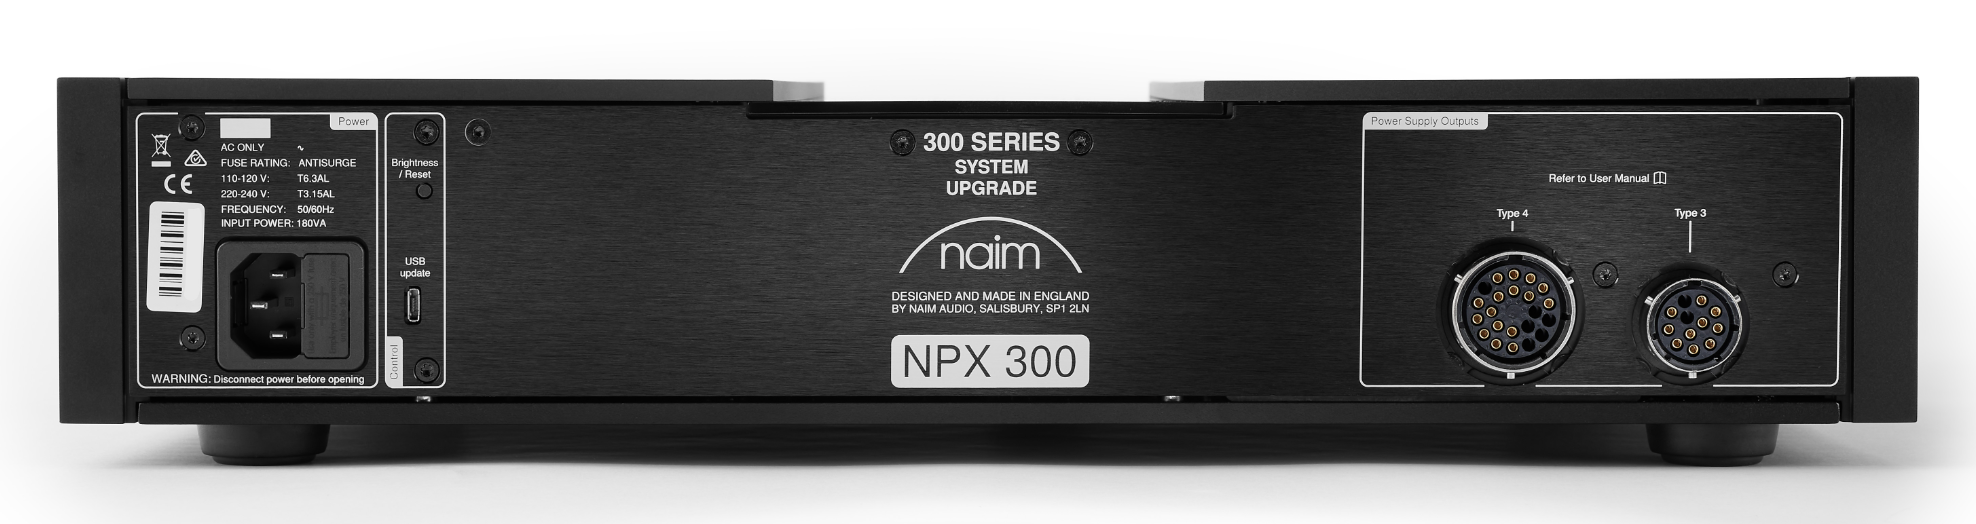 NPX300 rear.png